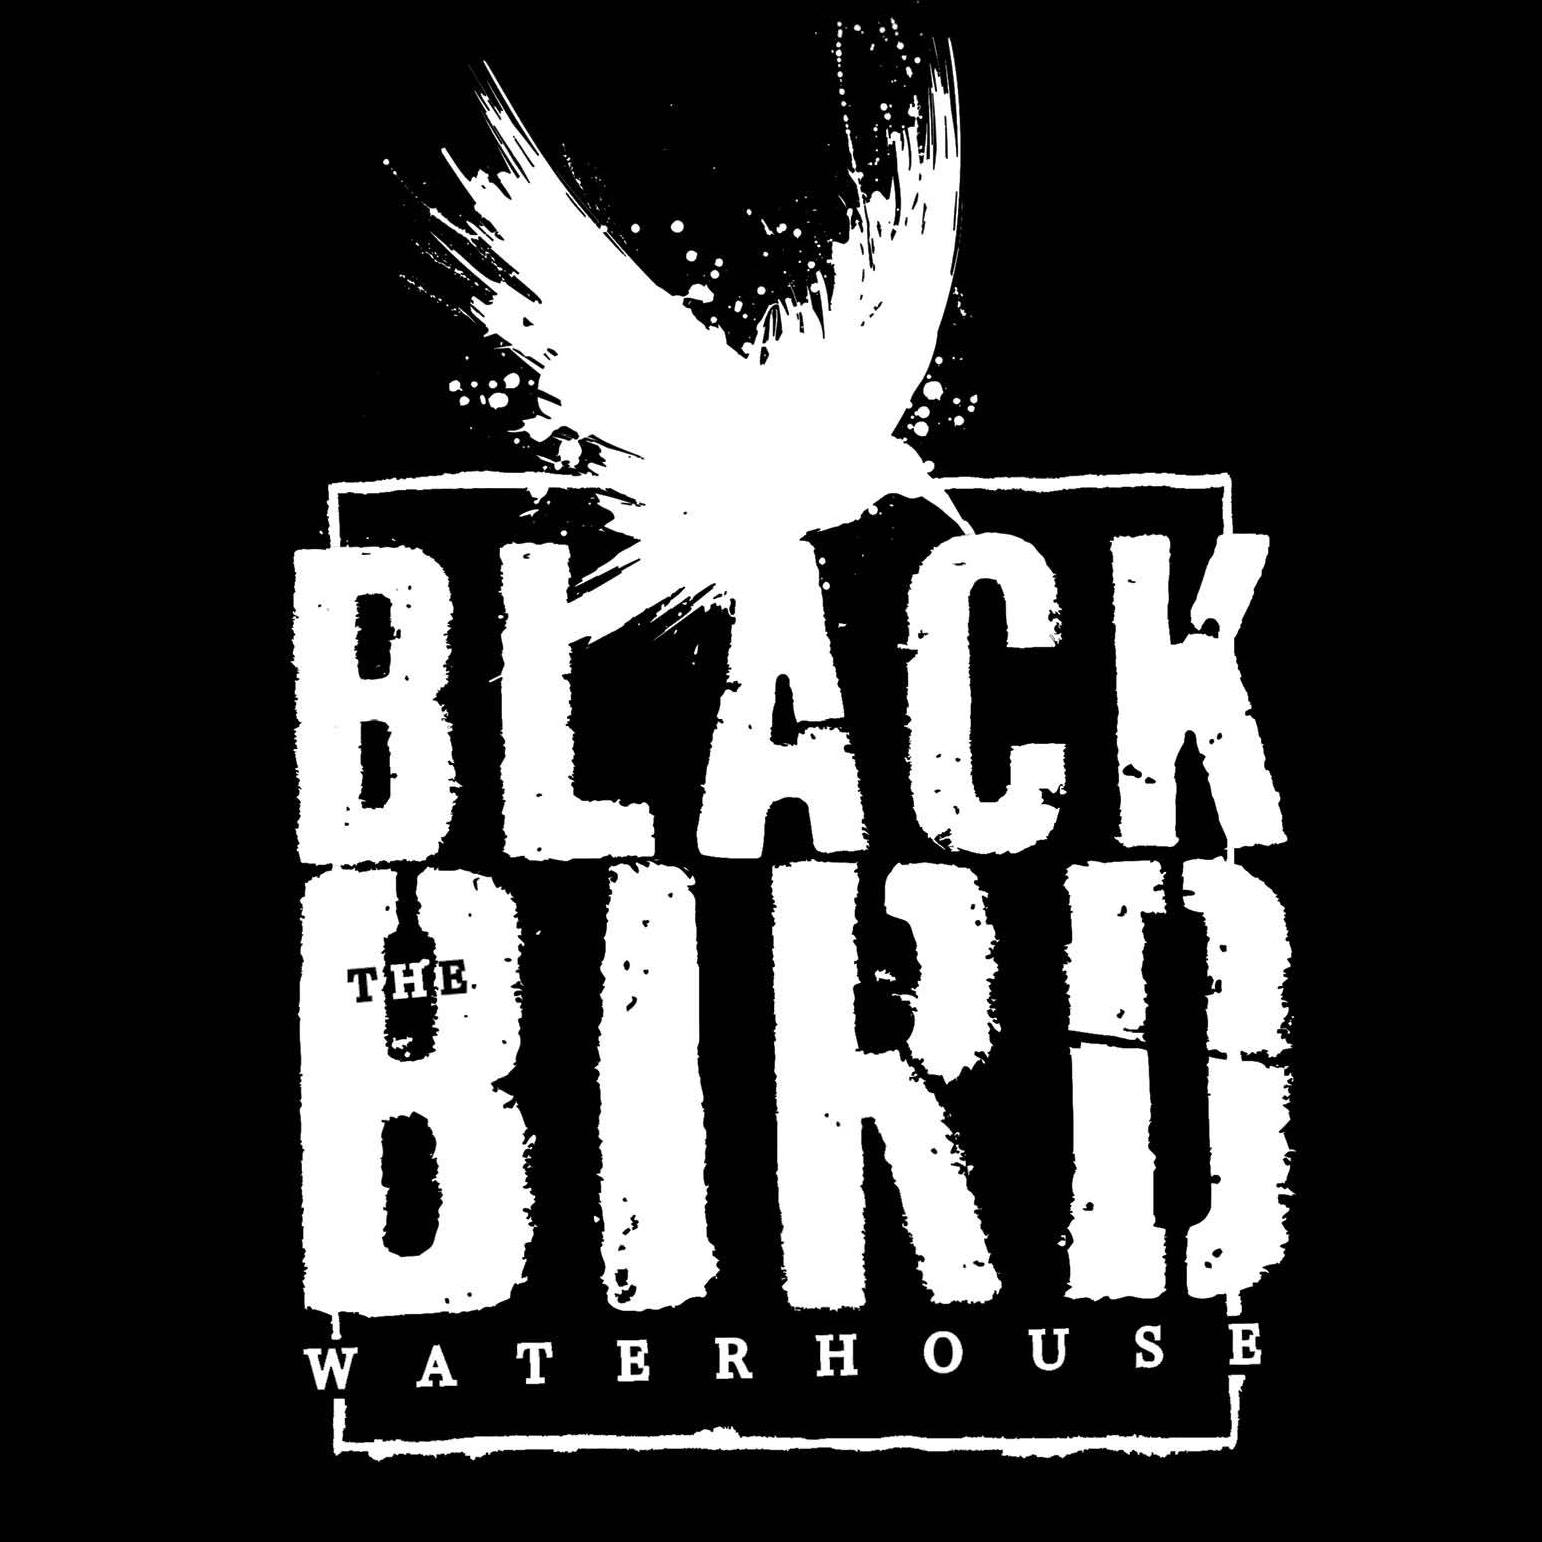 The Blackbird Waterhouse